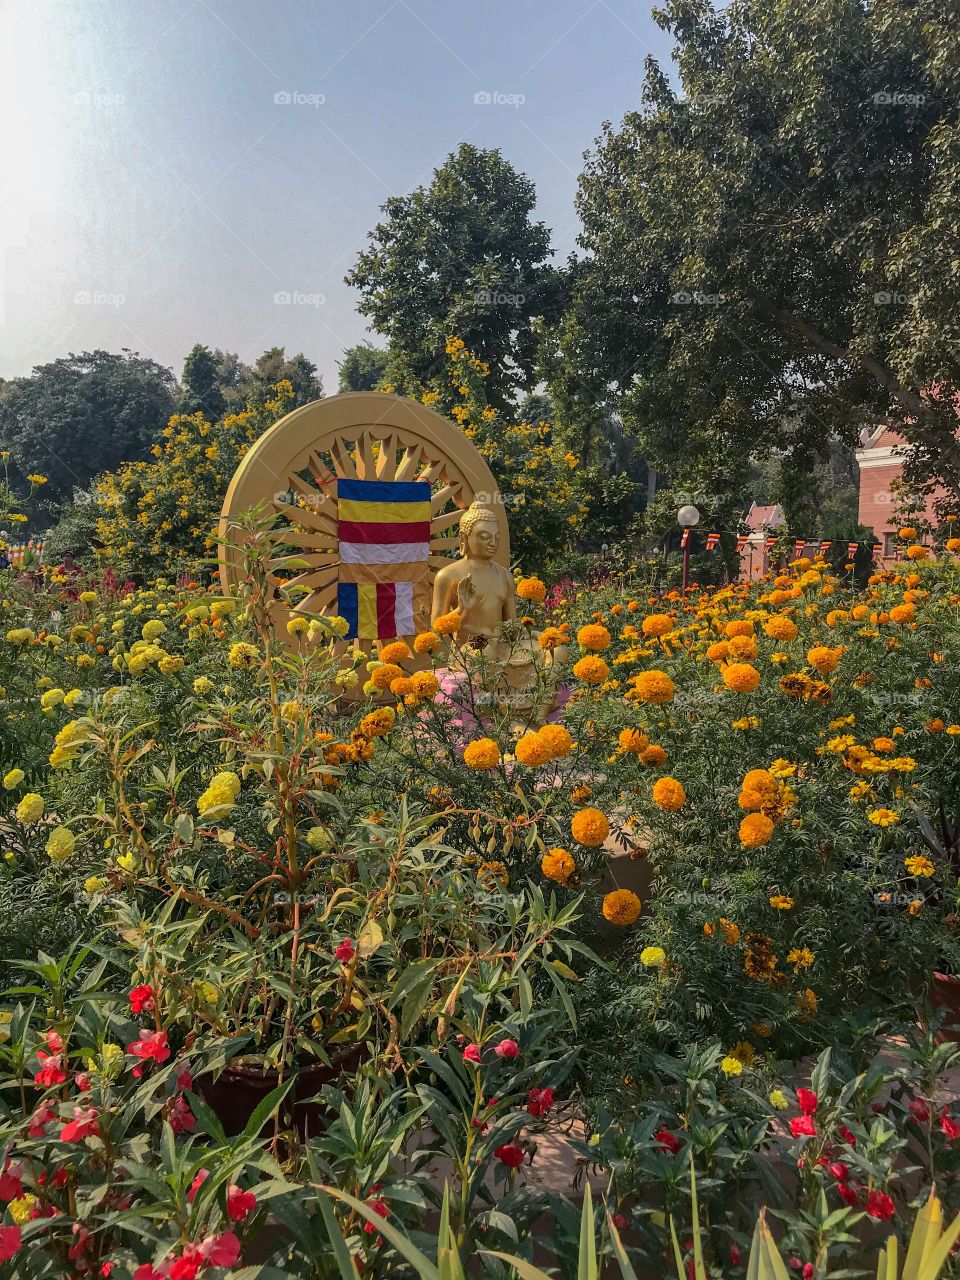 Serene Buddha in the garden of flowers ..